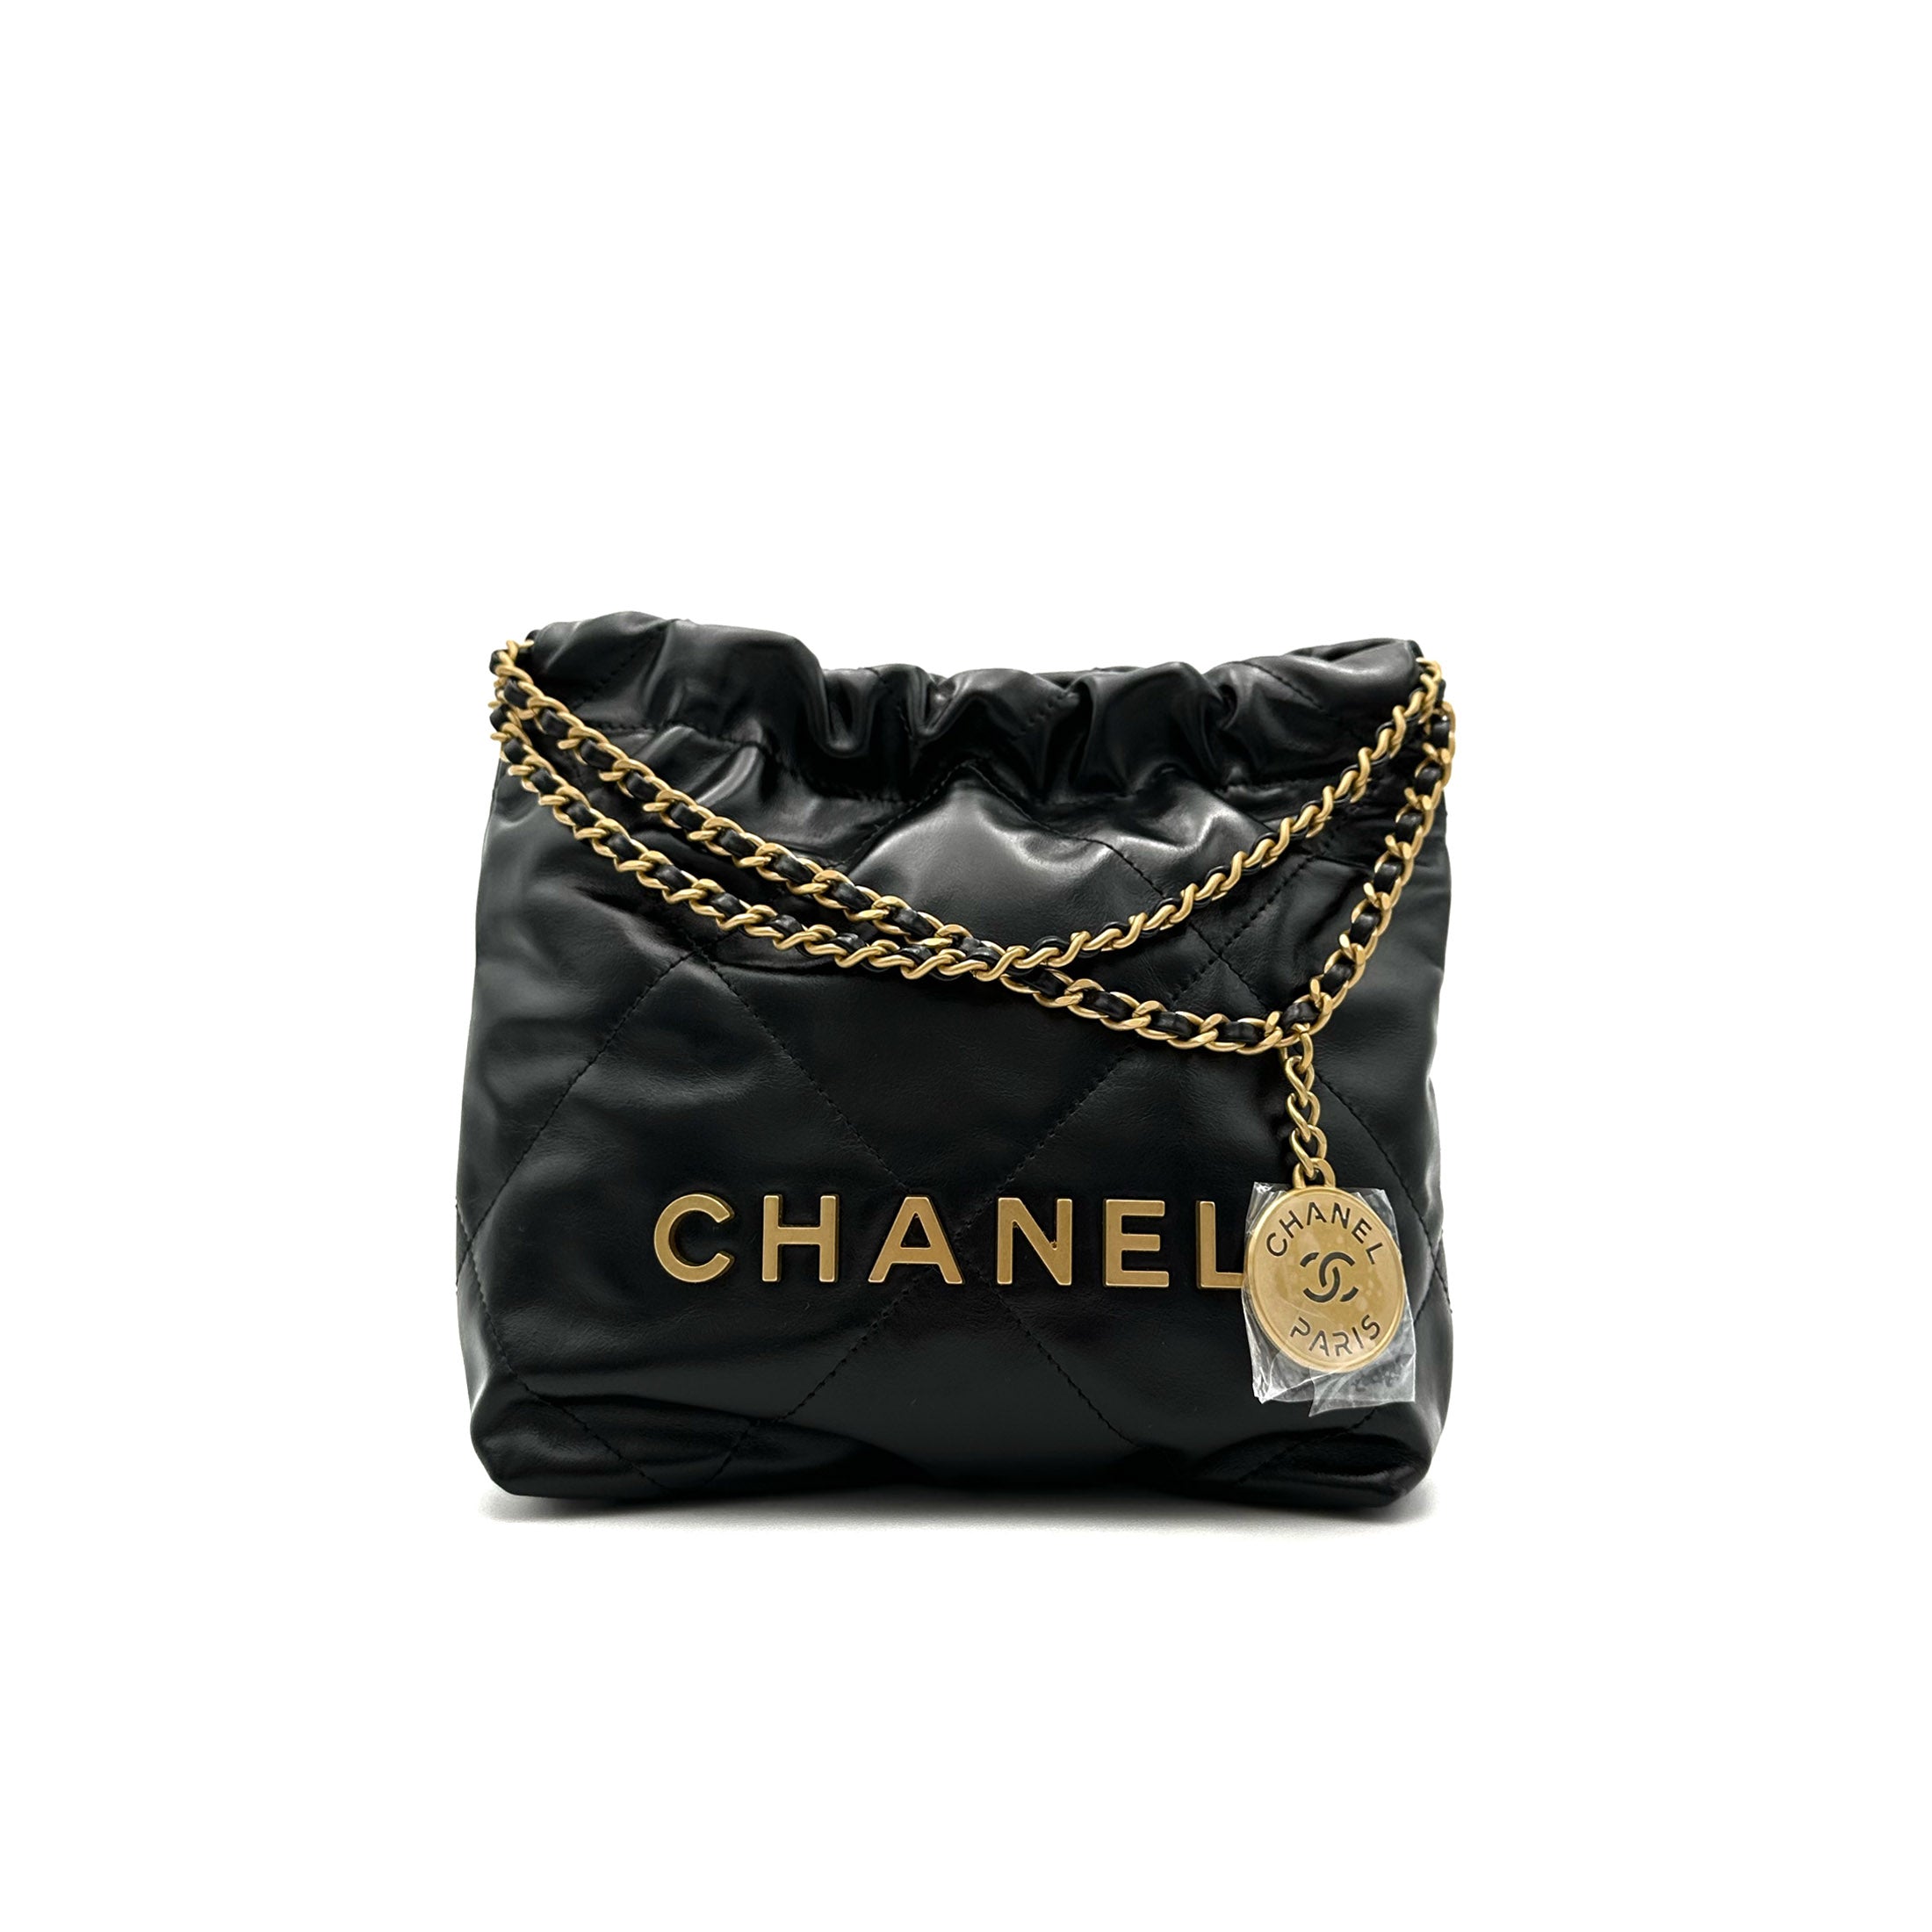 Chanel 22 Mini (Black) - Brand New